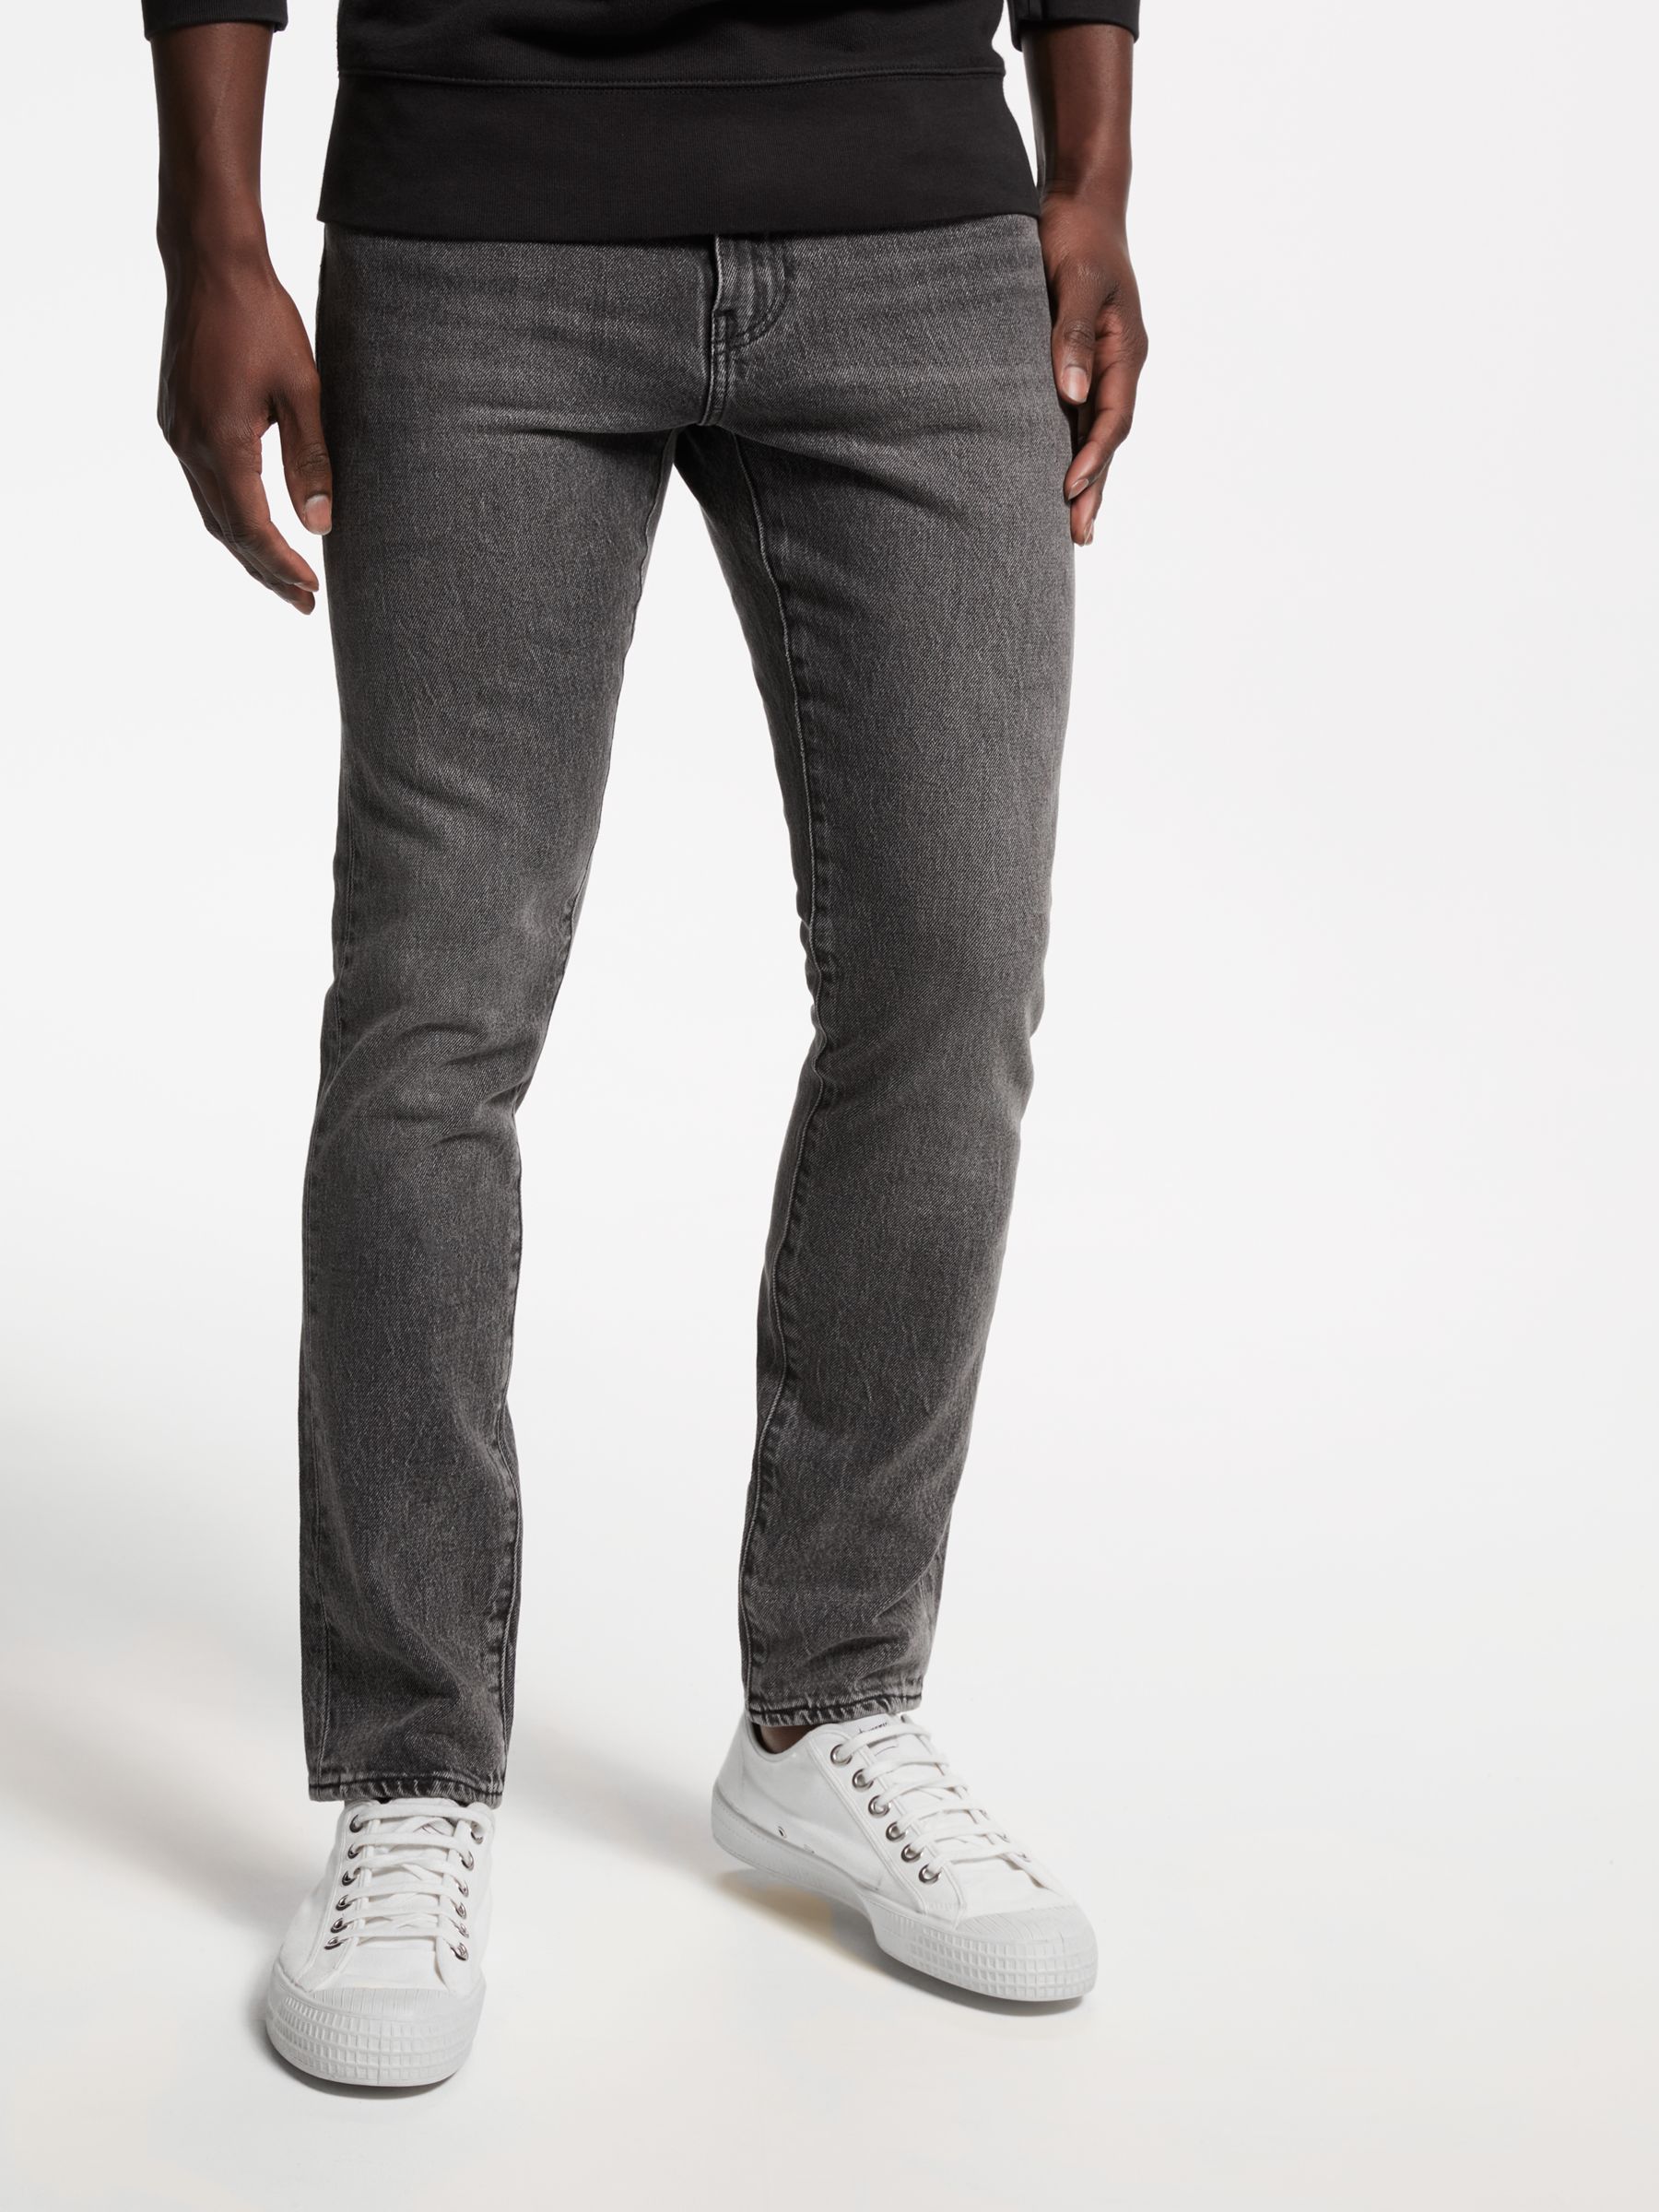 levis grey pants